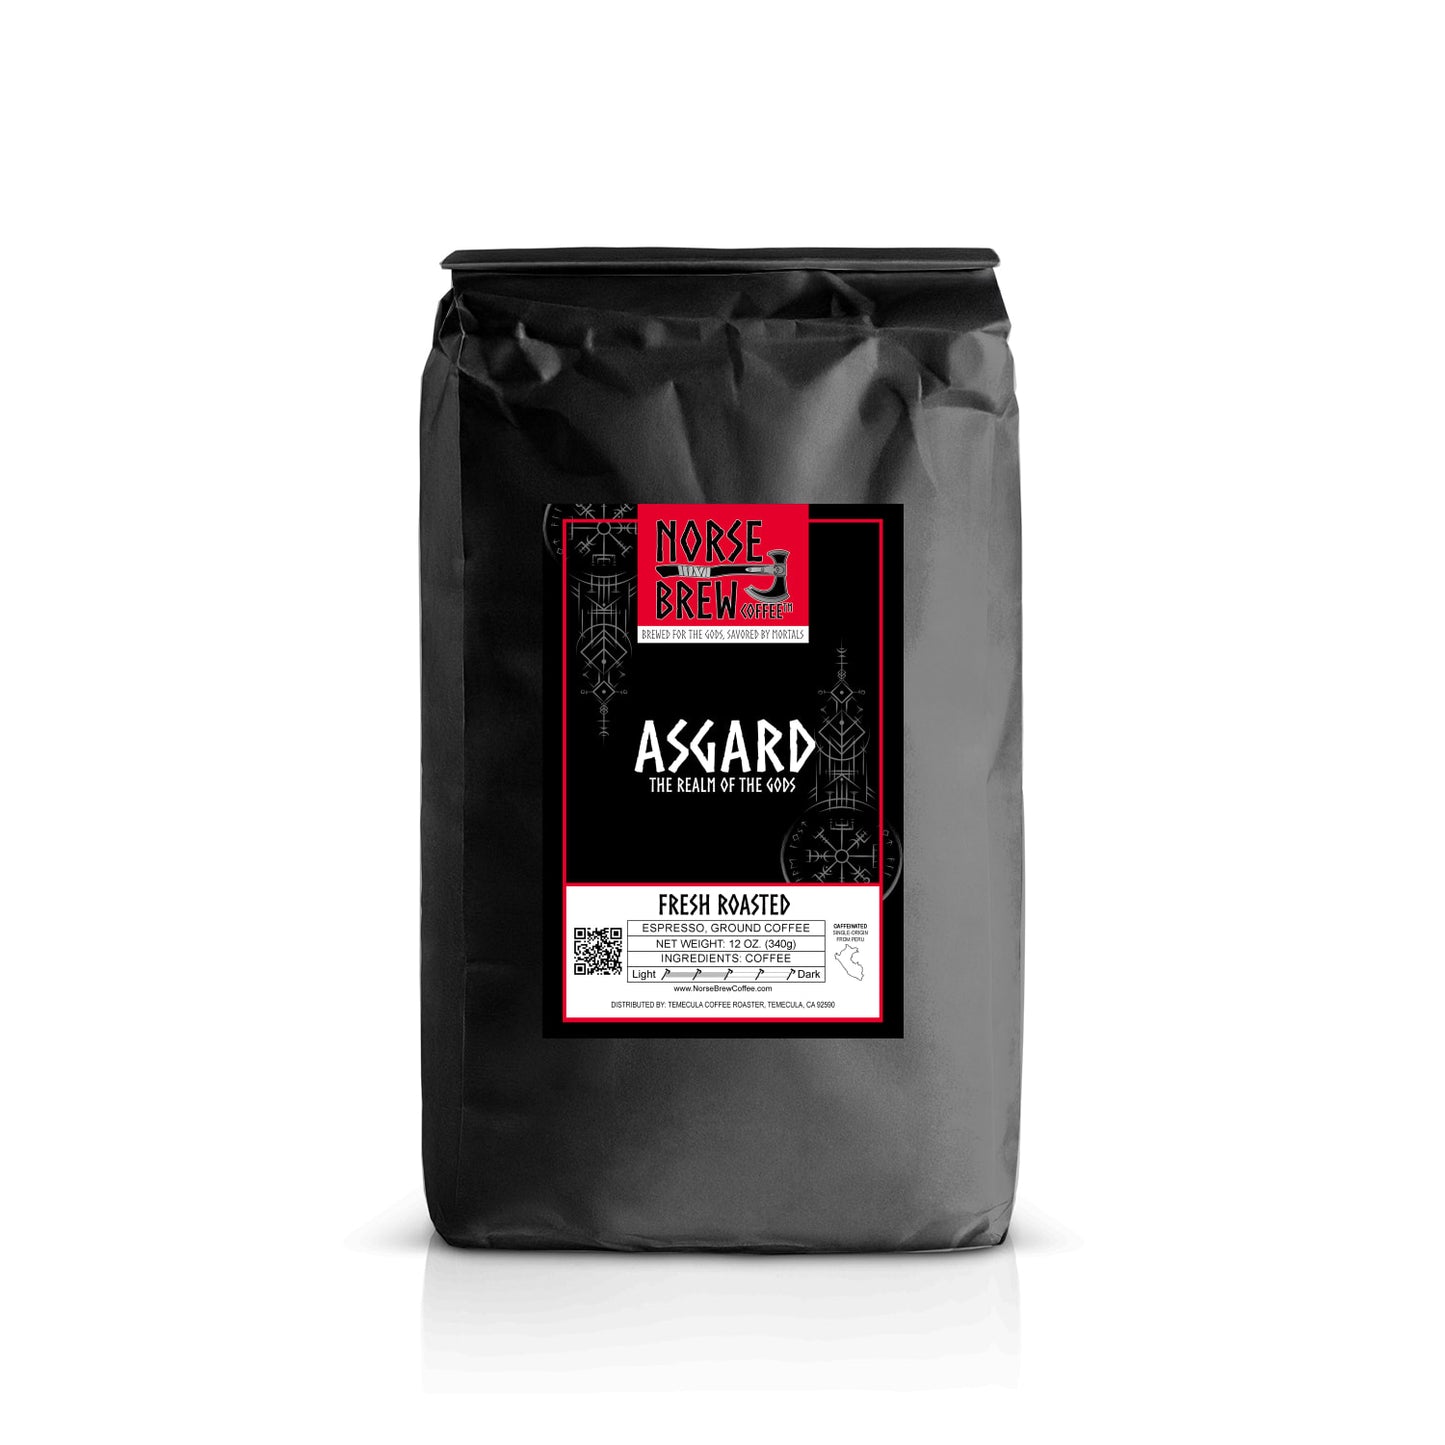 12 oz Bag of Asgard Medium Roast Espresso Ground Coffee Sourced from Piura, Peru